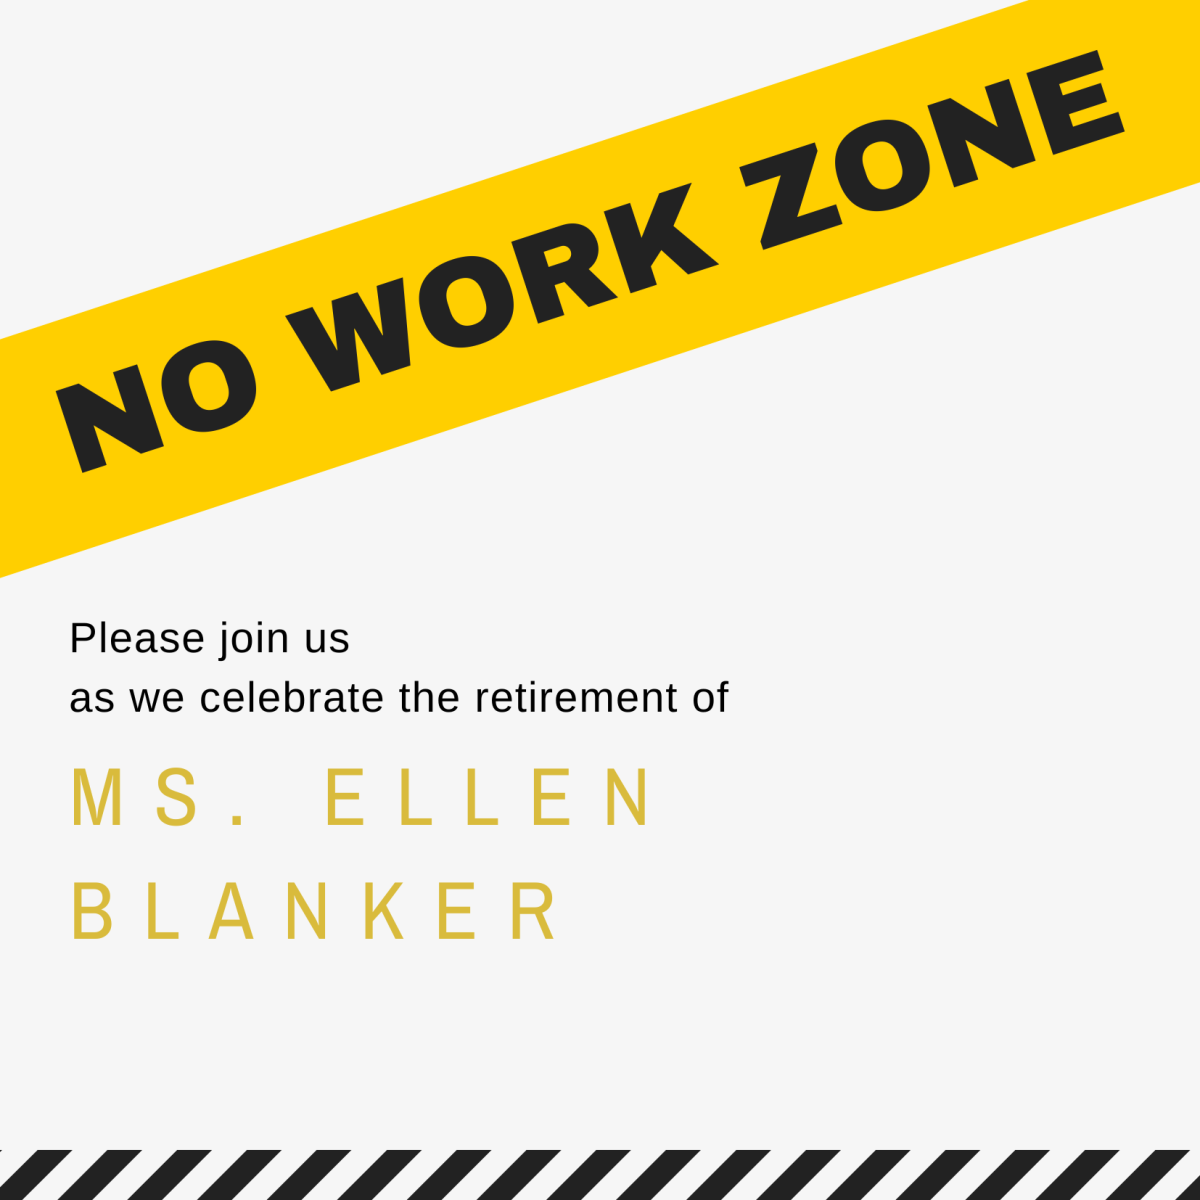 Ms. Ellen Blanker Breaks Her Bond With Teaching After 18 Years